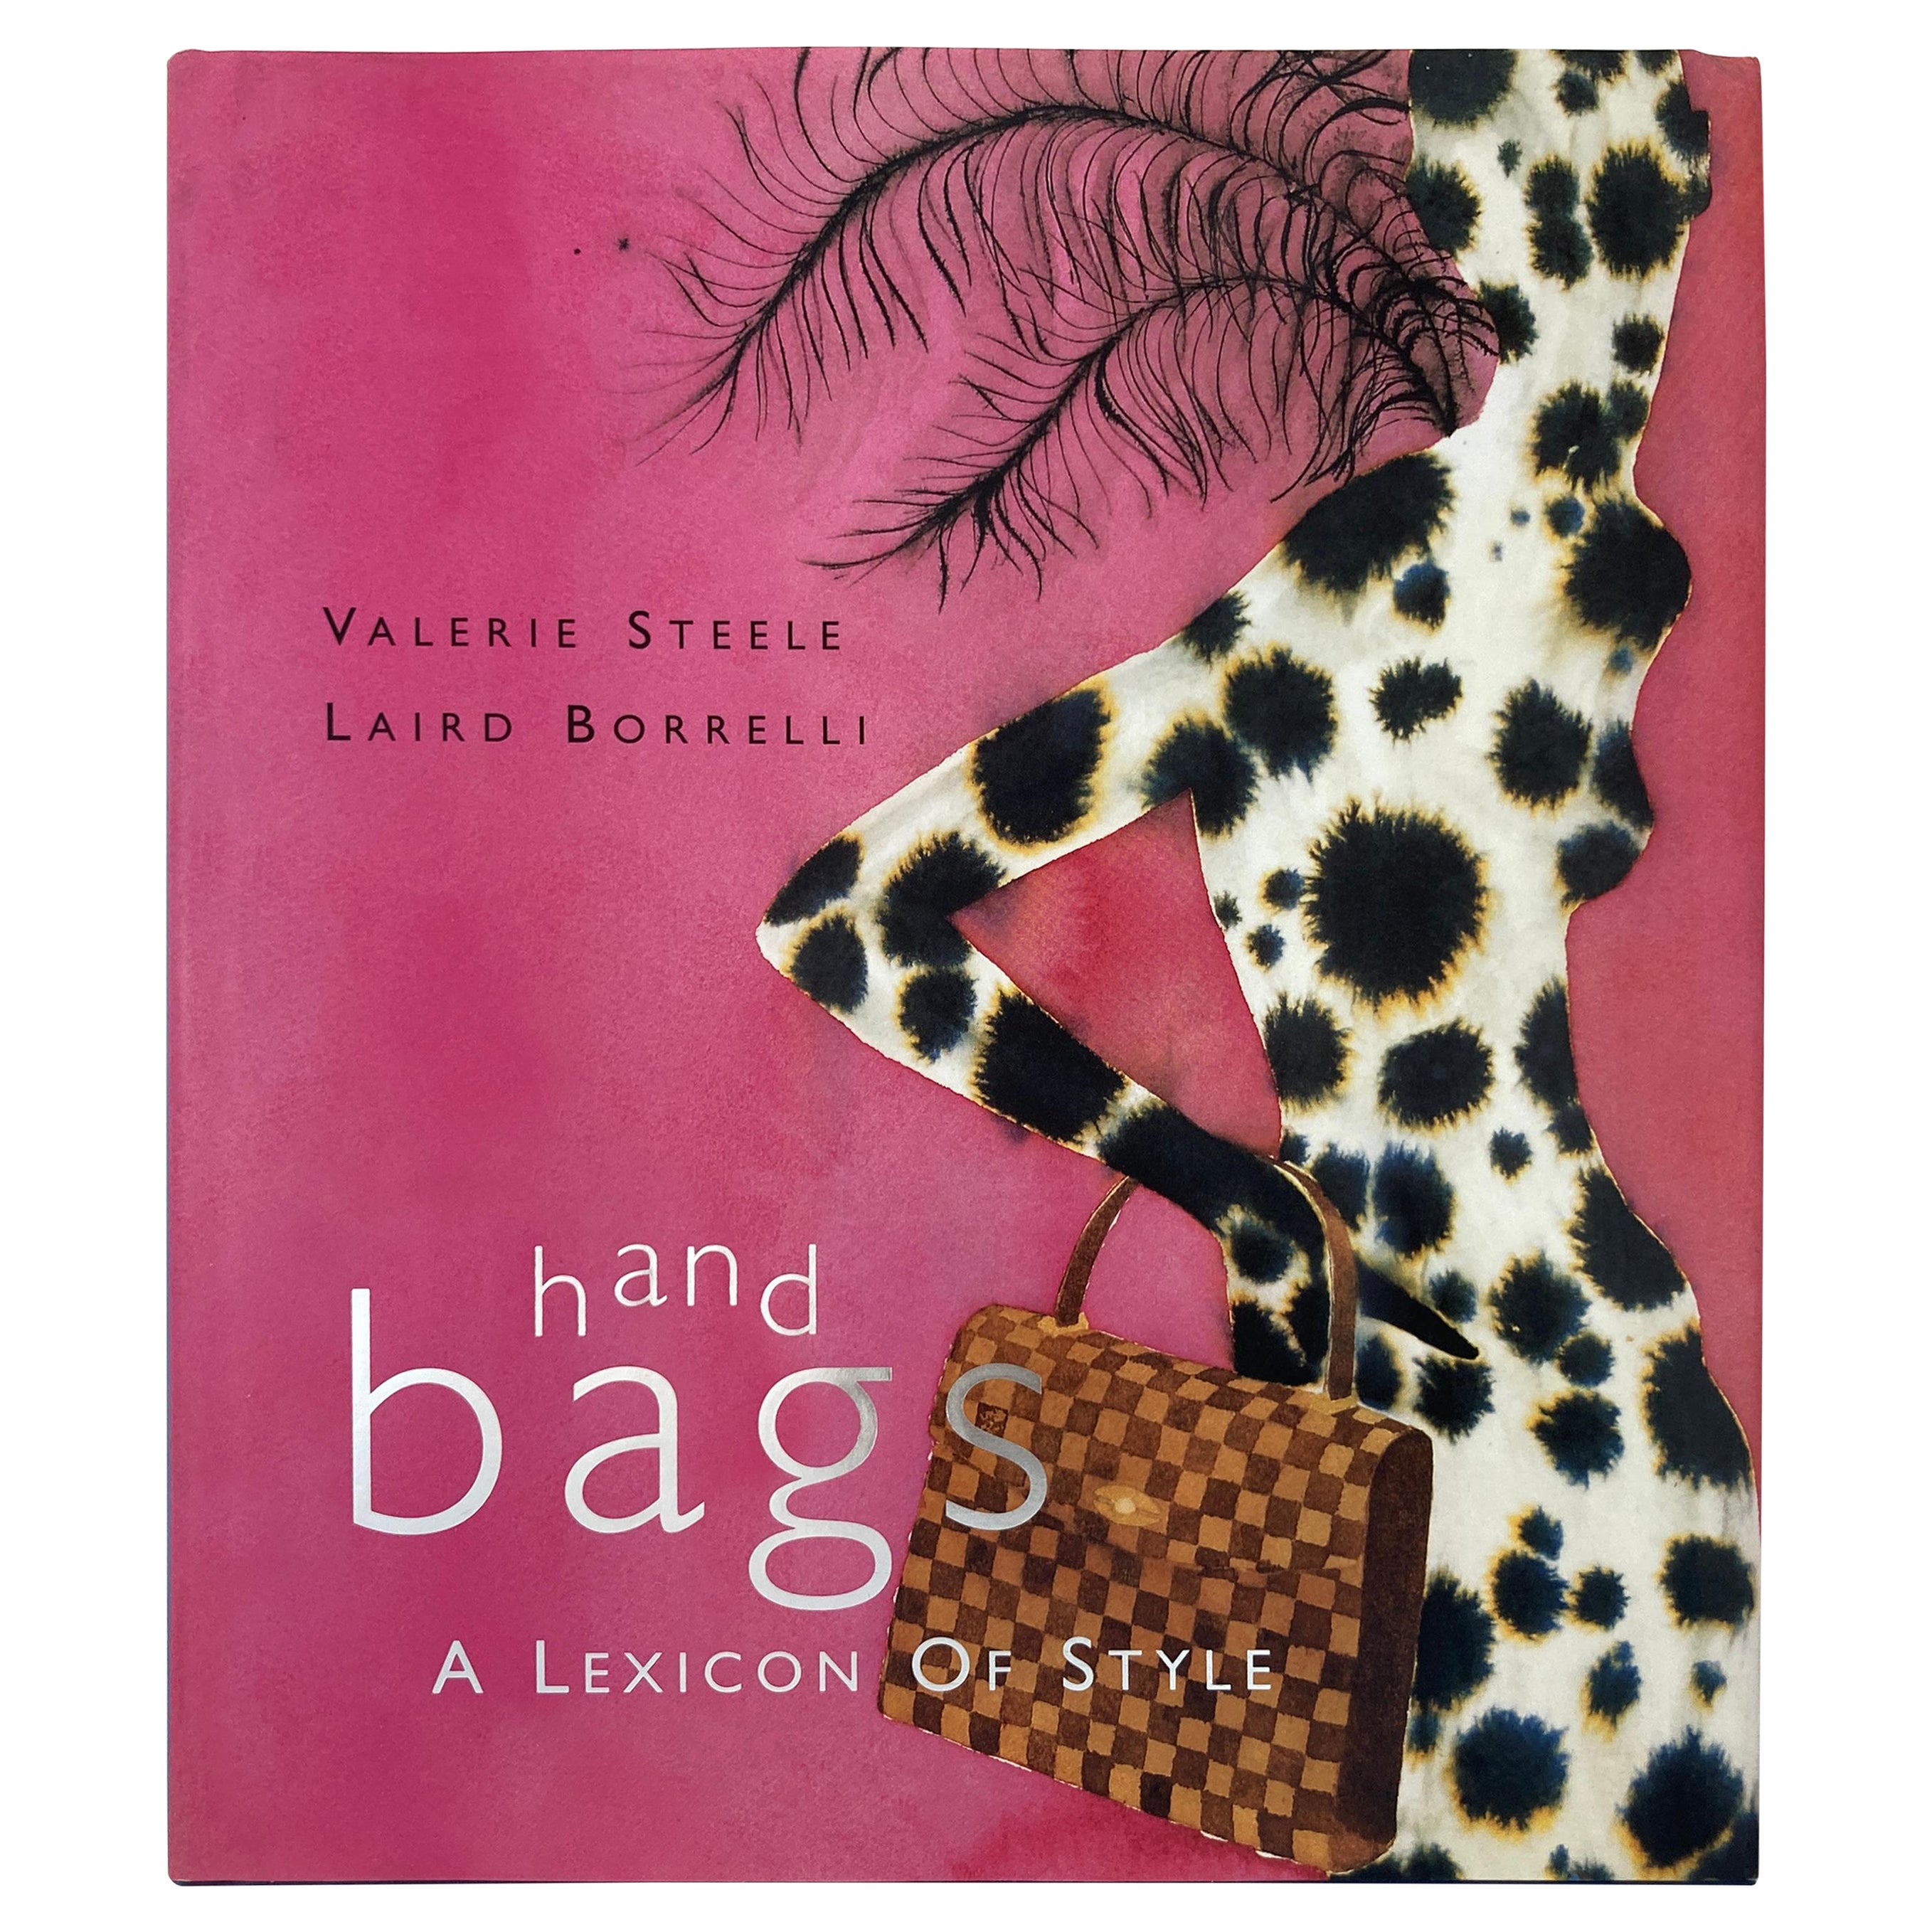 Taschen : A Lexicon of Style Valerie Steele, Laird Borrelli, Hardcoverbuch 1st Ed.